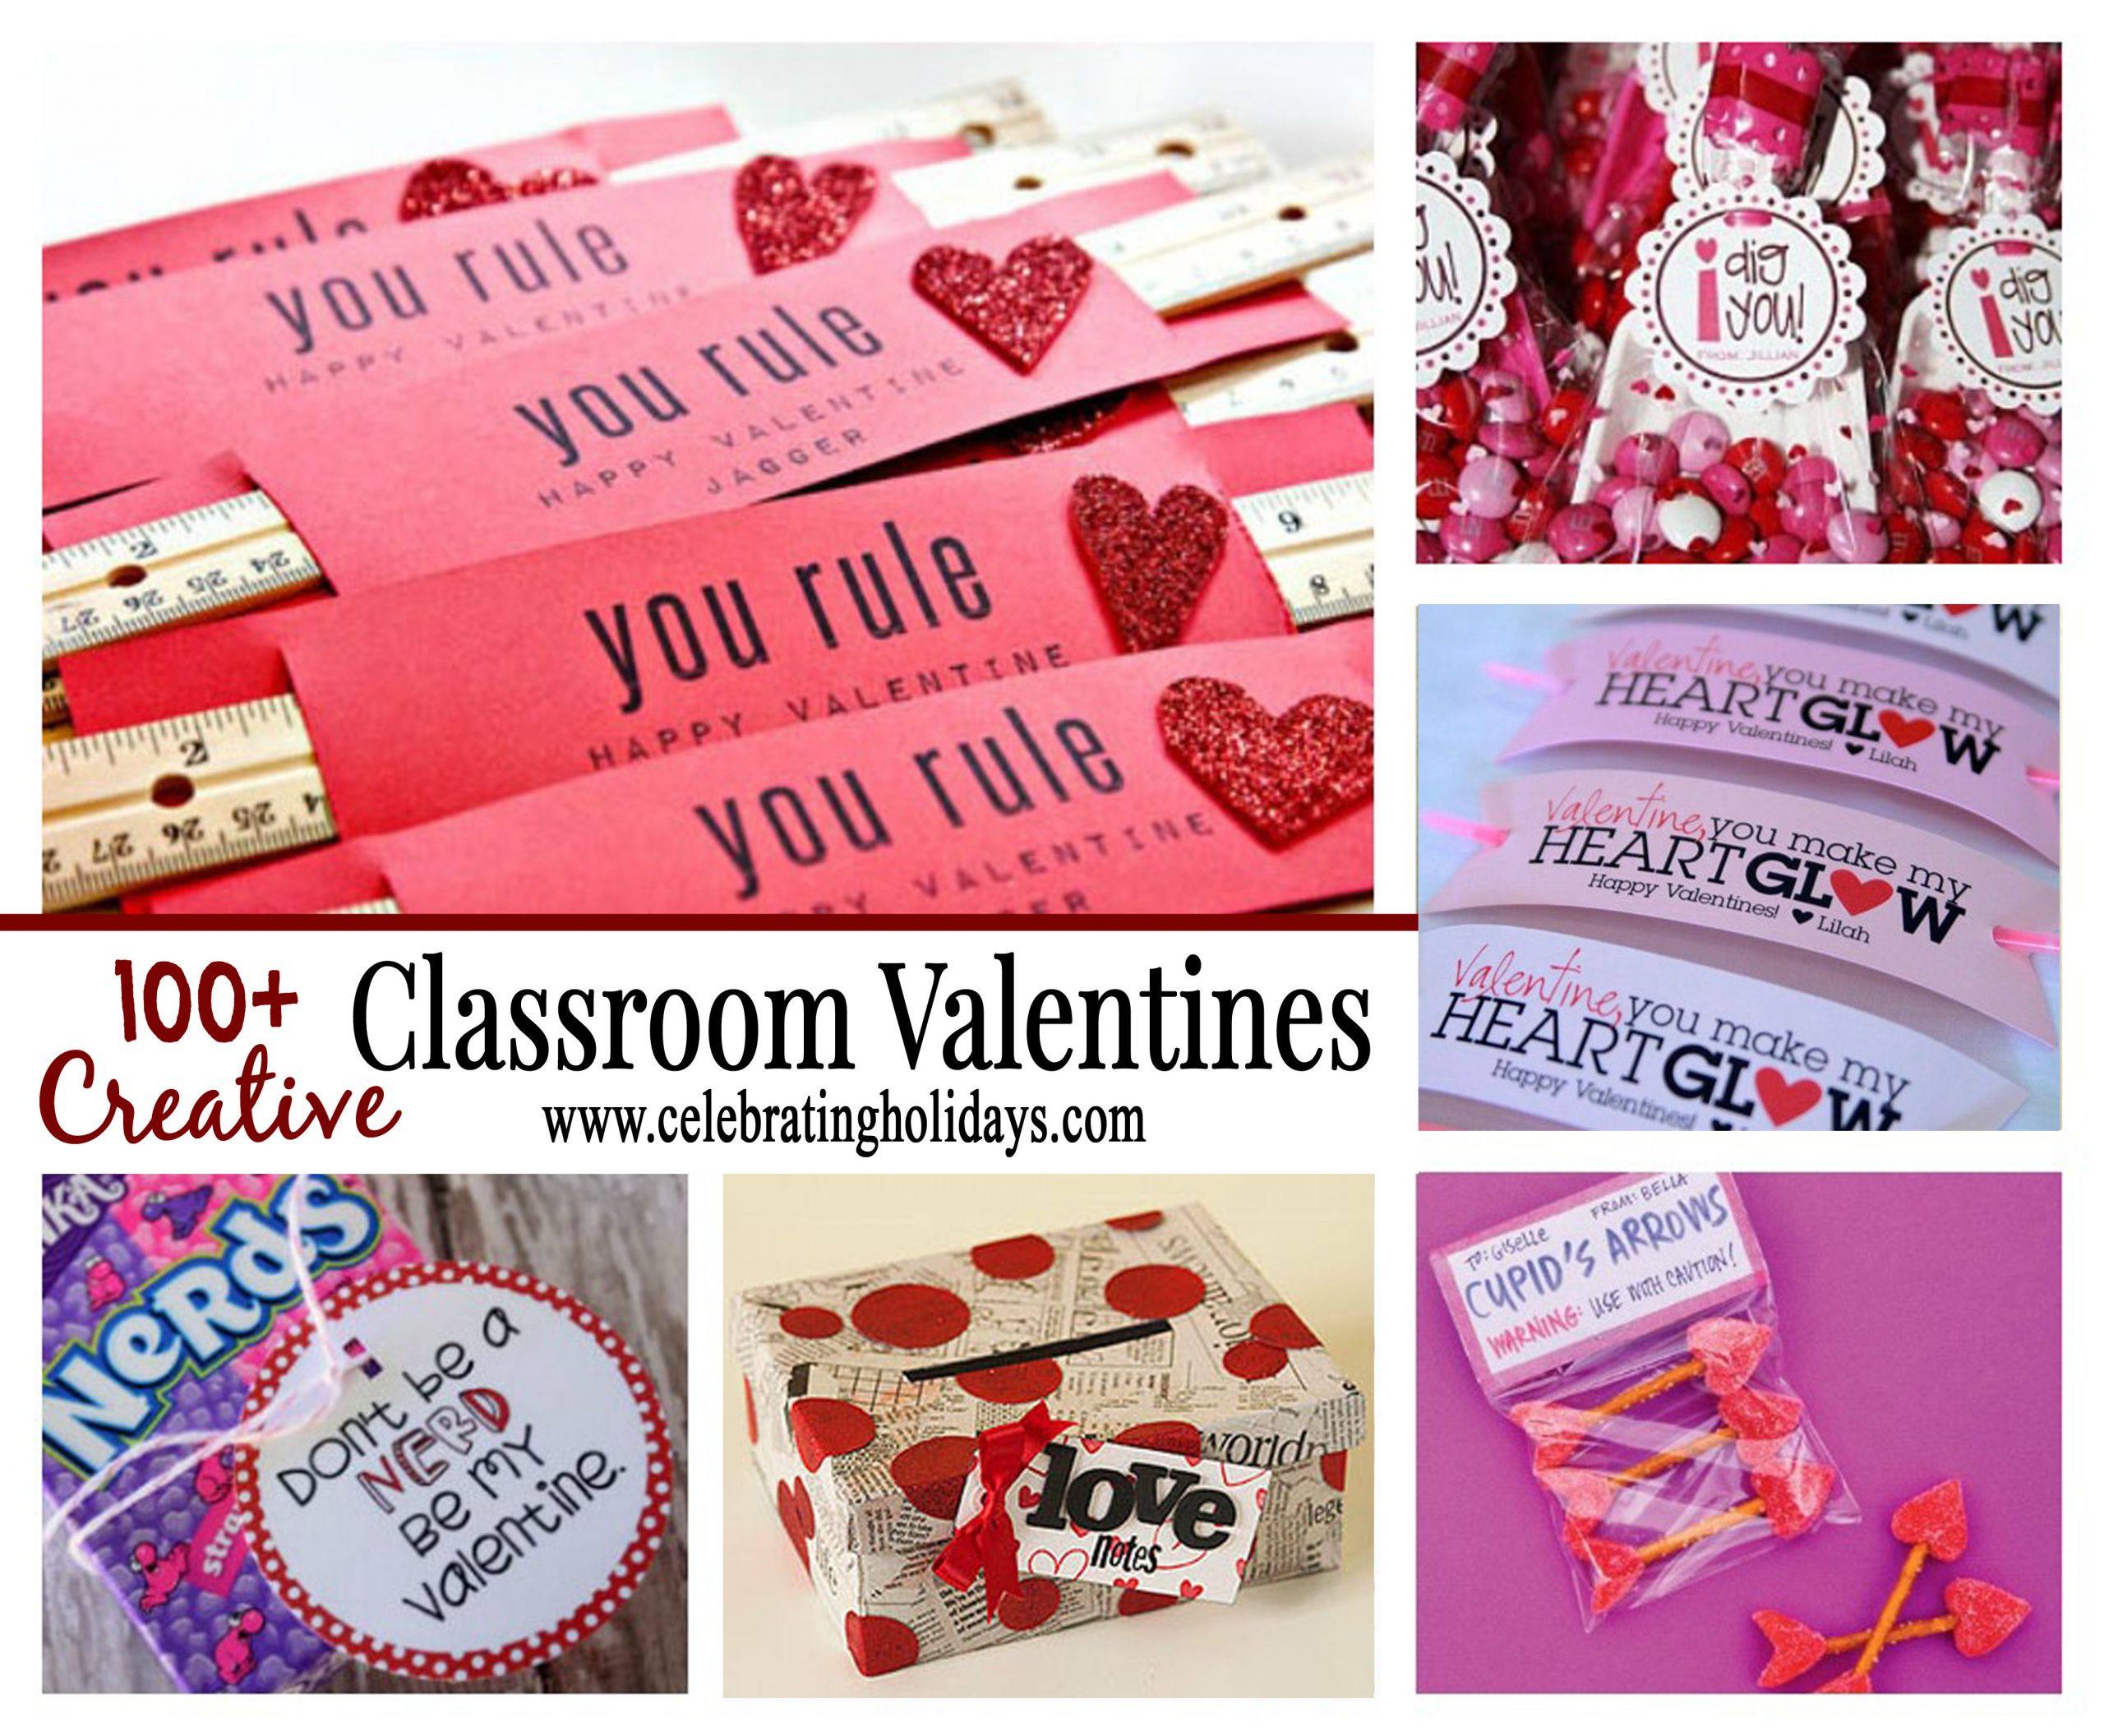 Classroom Valentine Gift Ideas
 Classroom Valentine Ideas